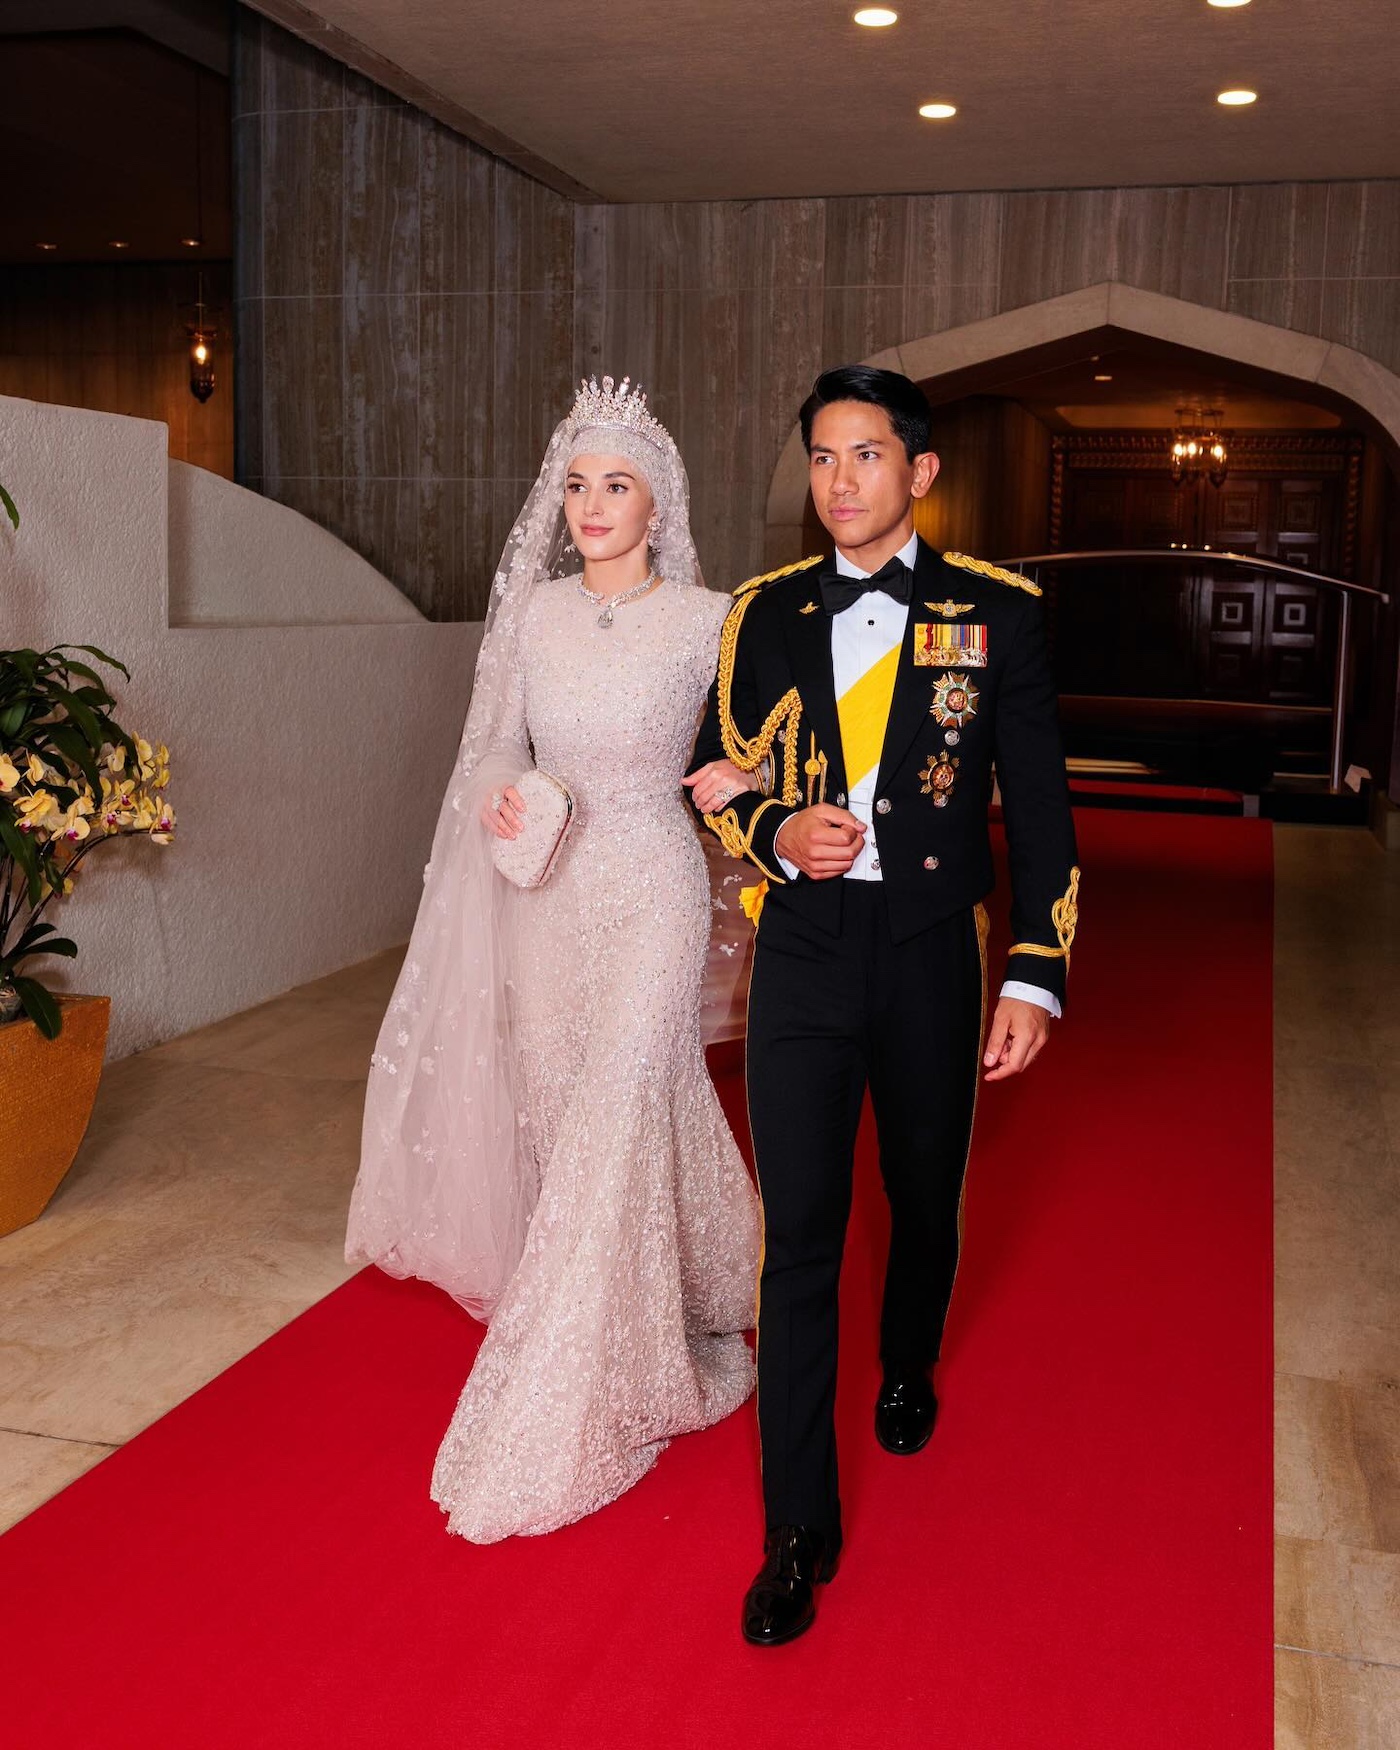 Brunei prince Abdul Mateen Sultan Hassanal Bolkiah married